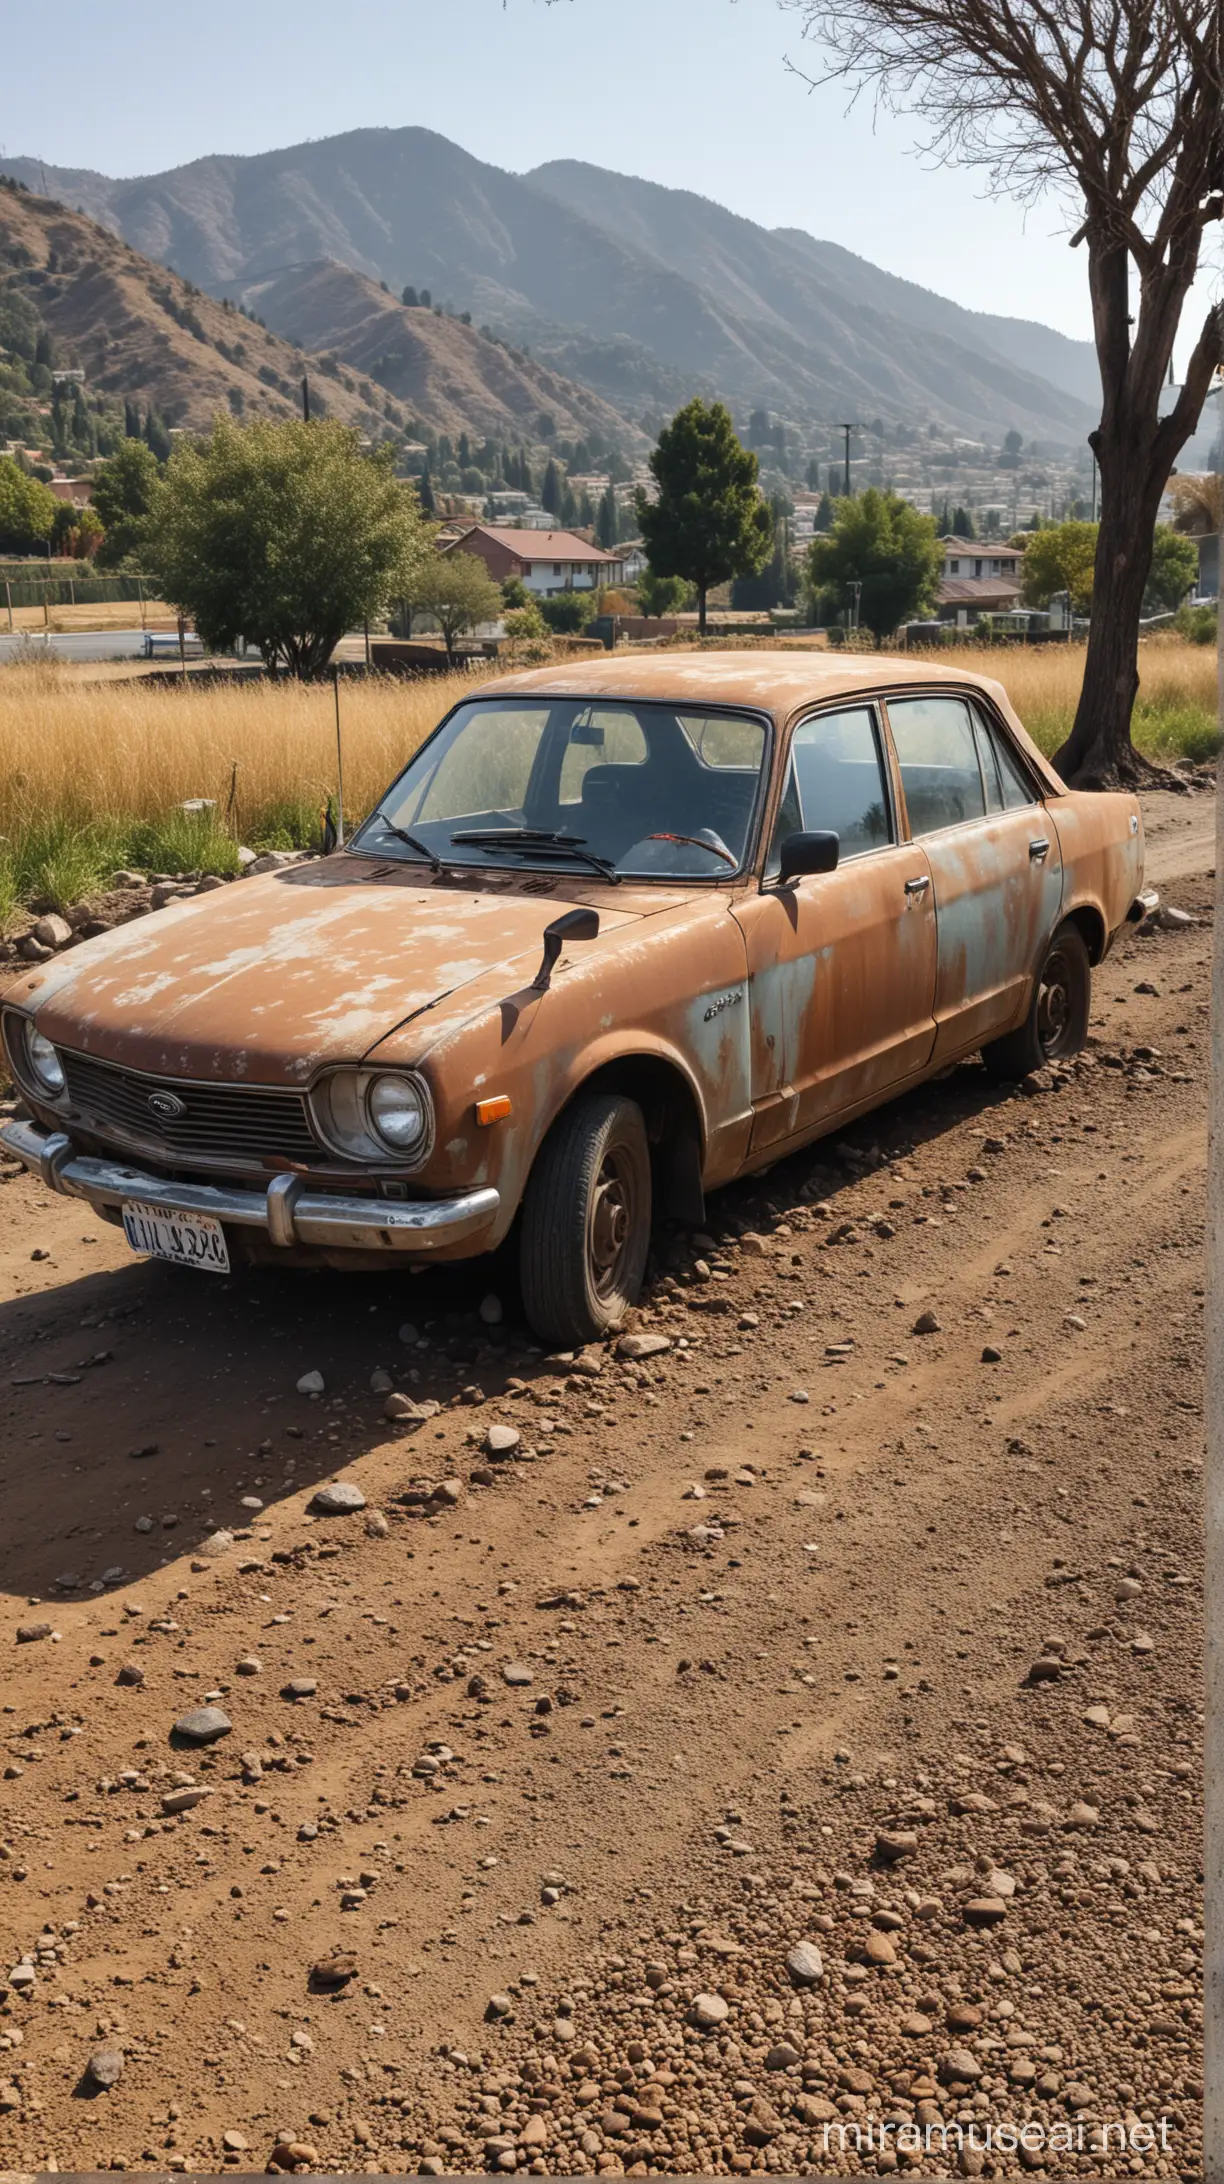 Rusty car datsun 620 at village, mountain view